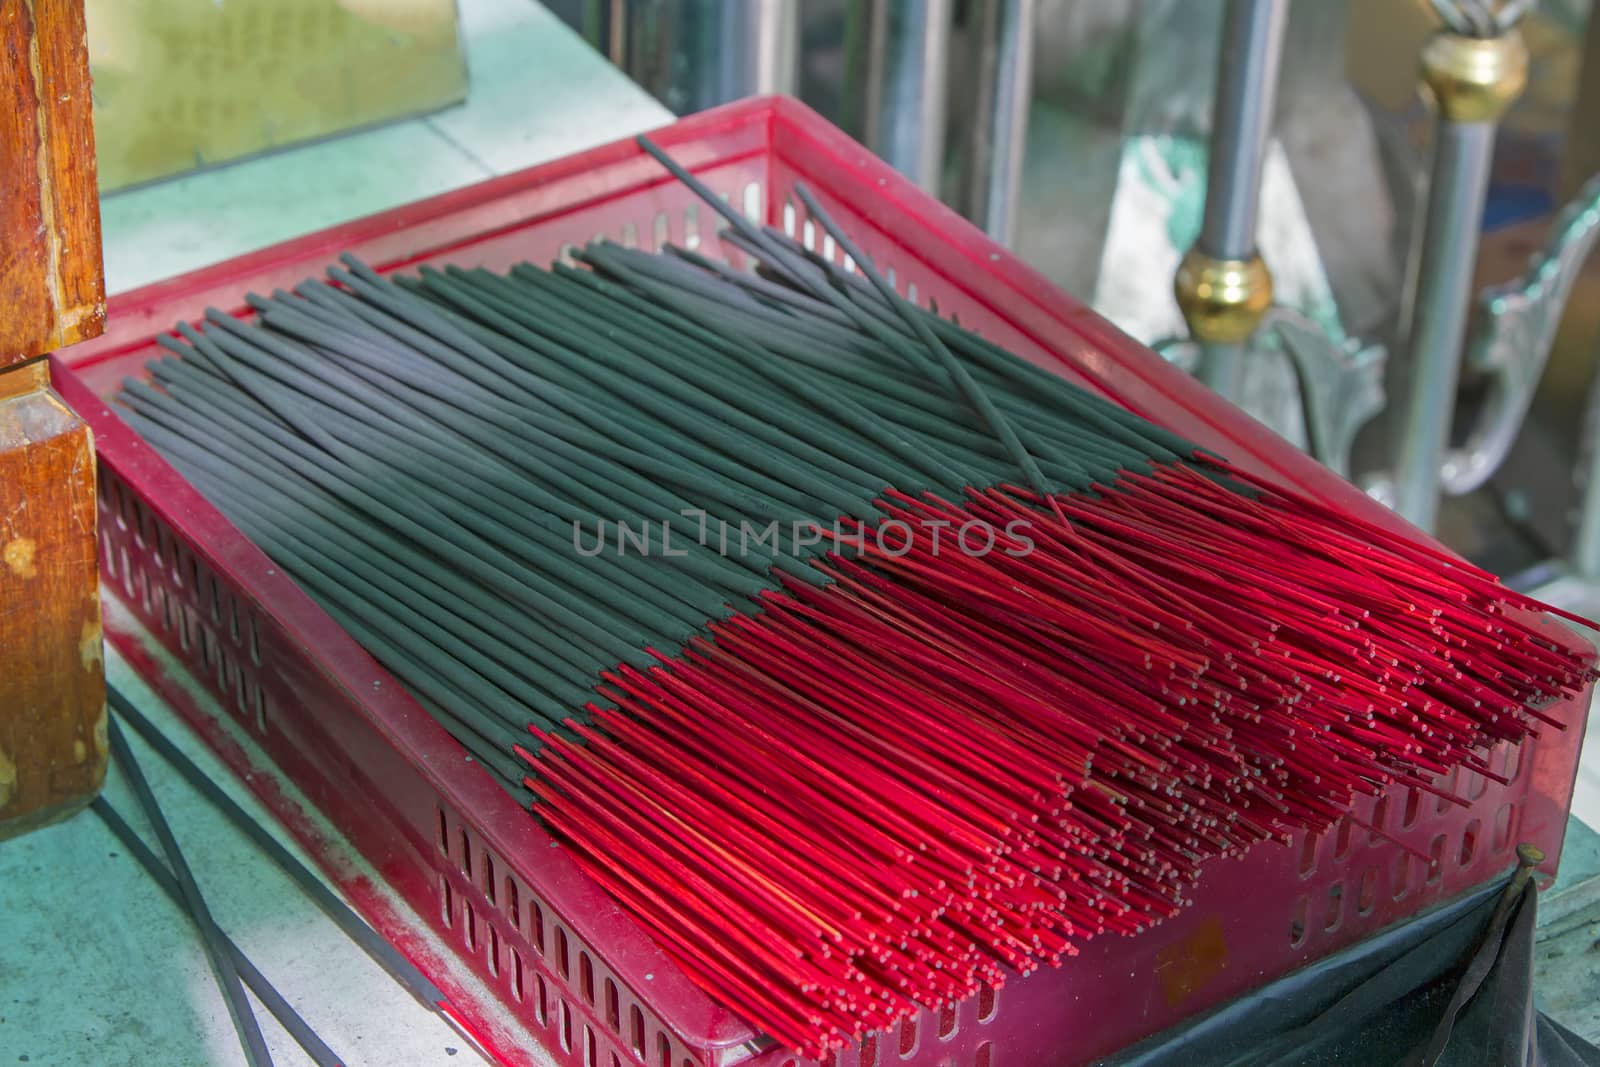 Many black incense sticks in a red basket.